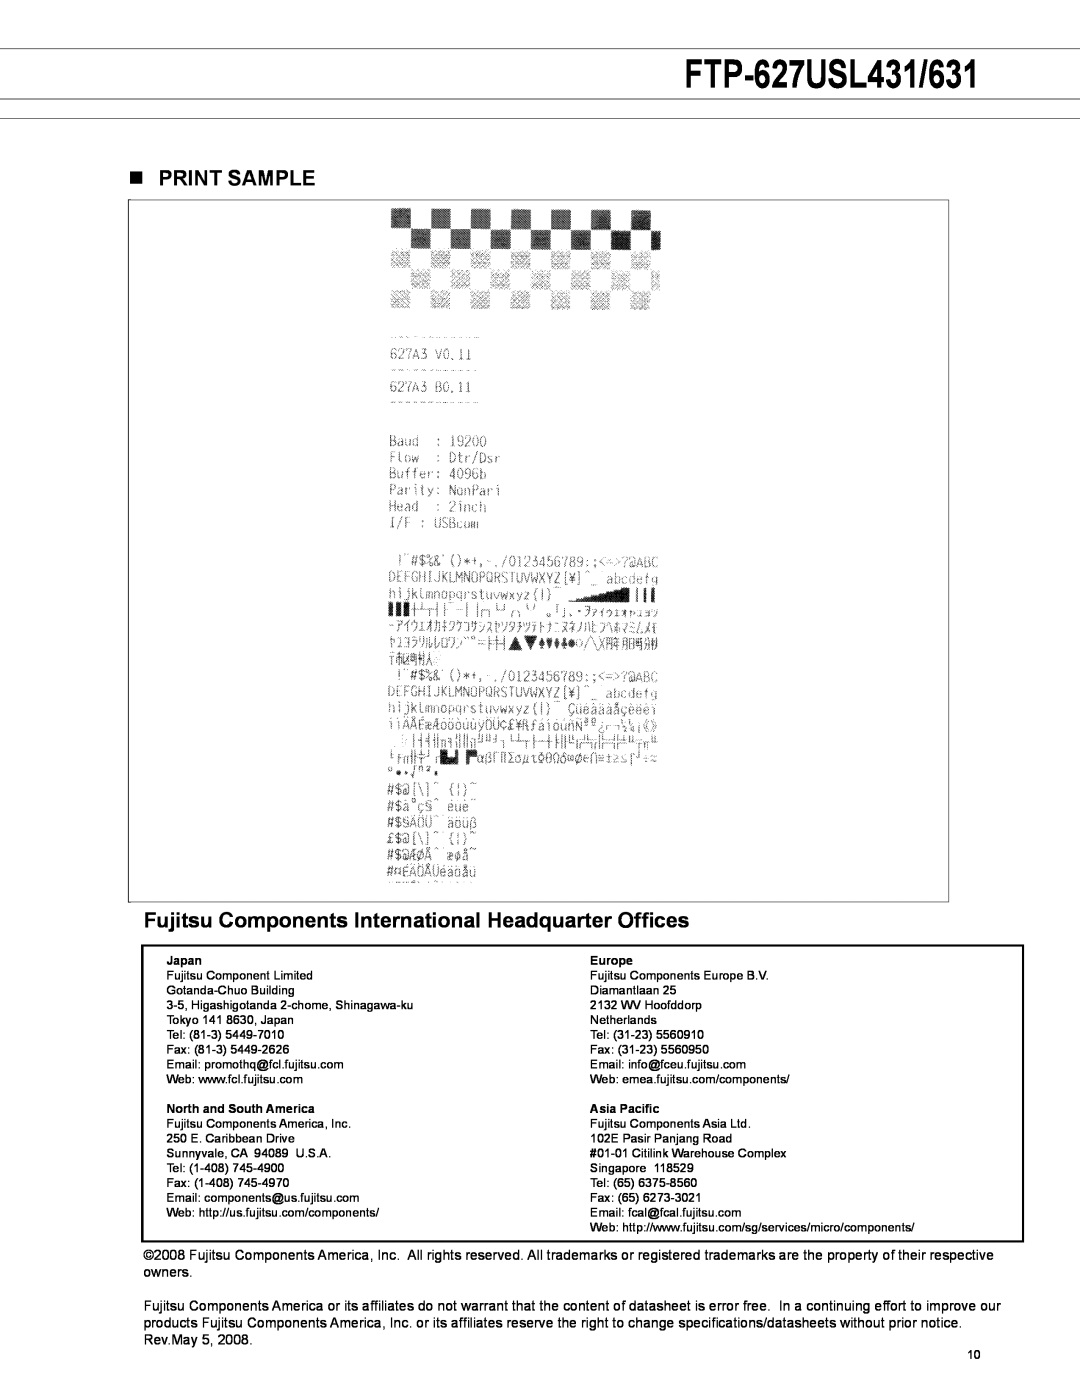 Fujitsu manual n print sample Fujitsu Components International Headquarter Offices, FTP-627USL431/631, Japan, Europe 